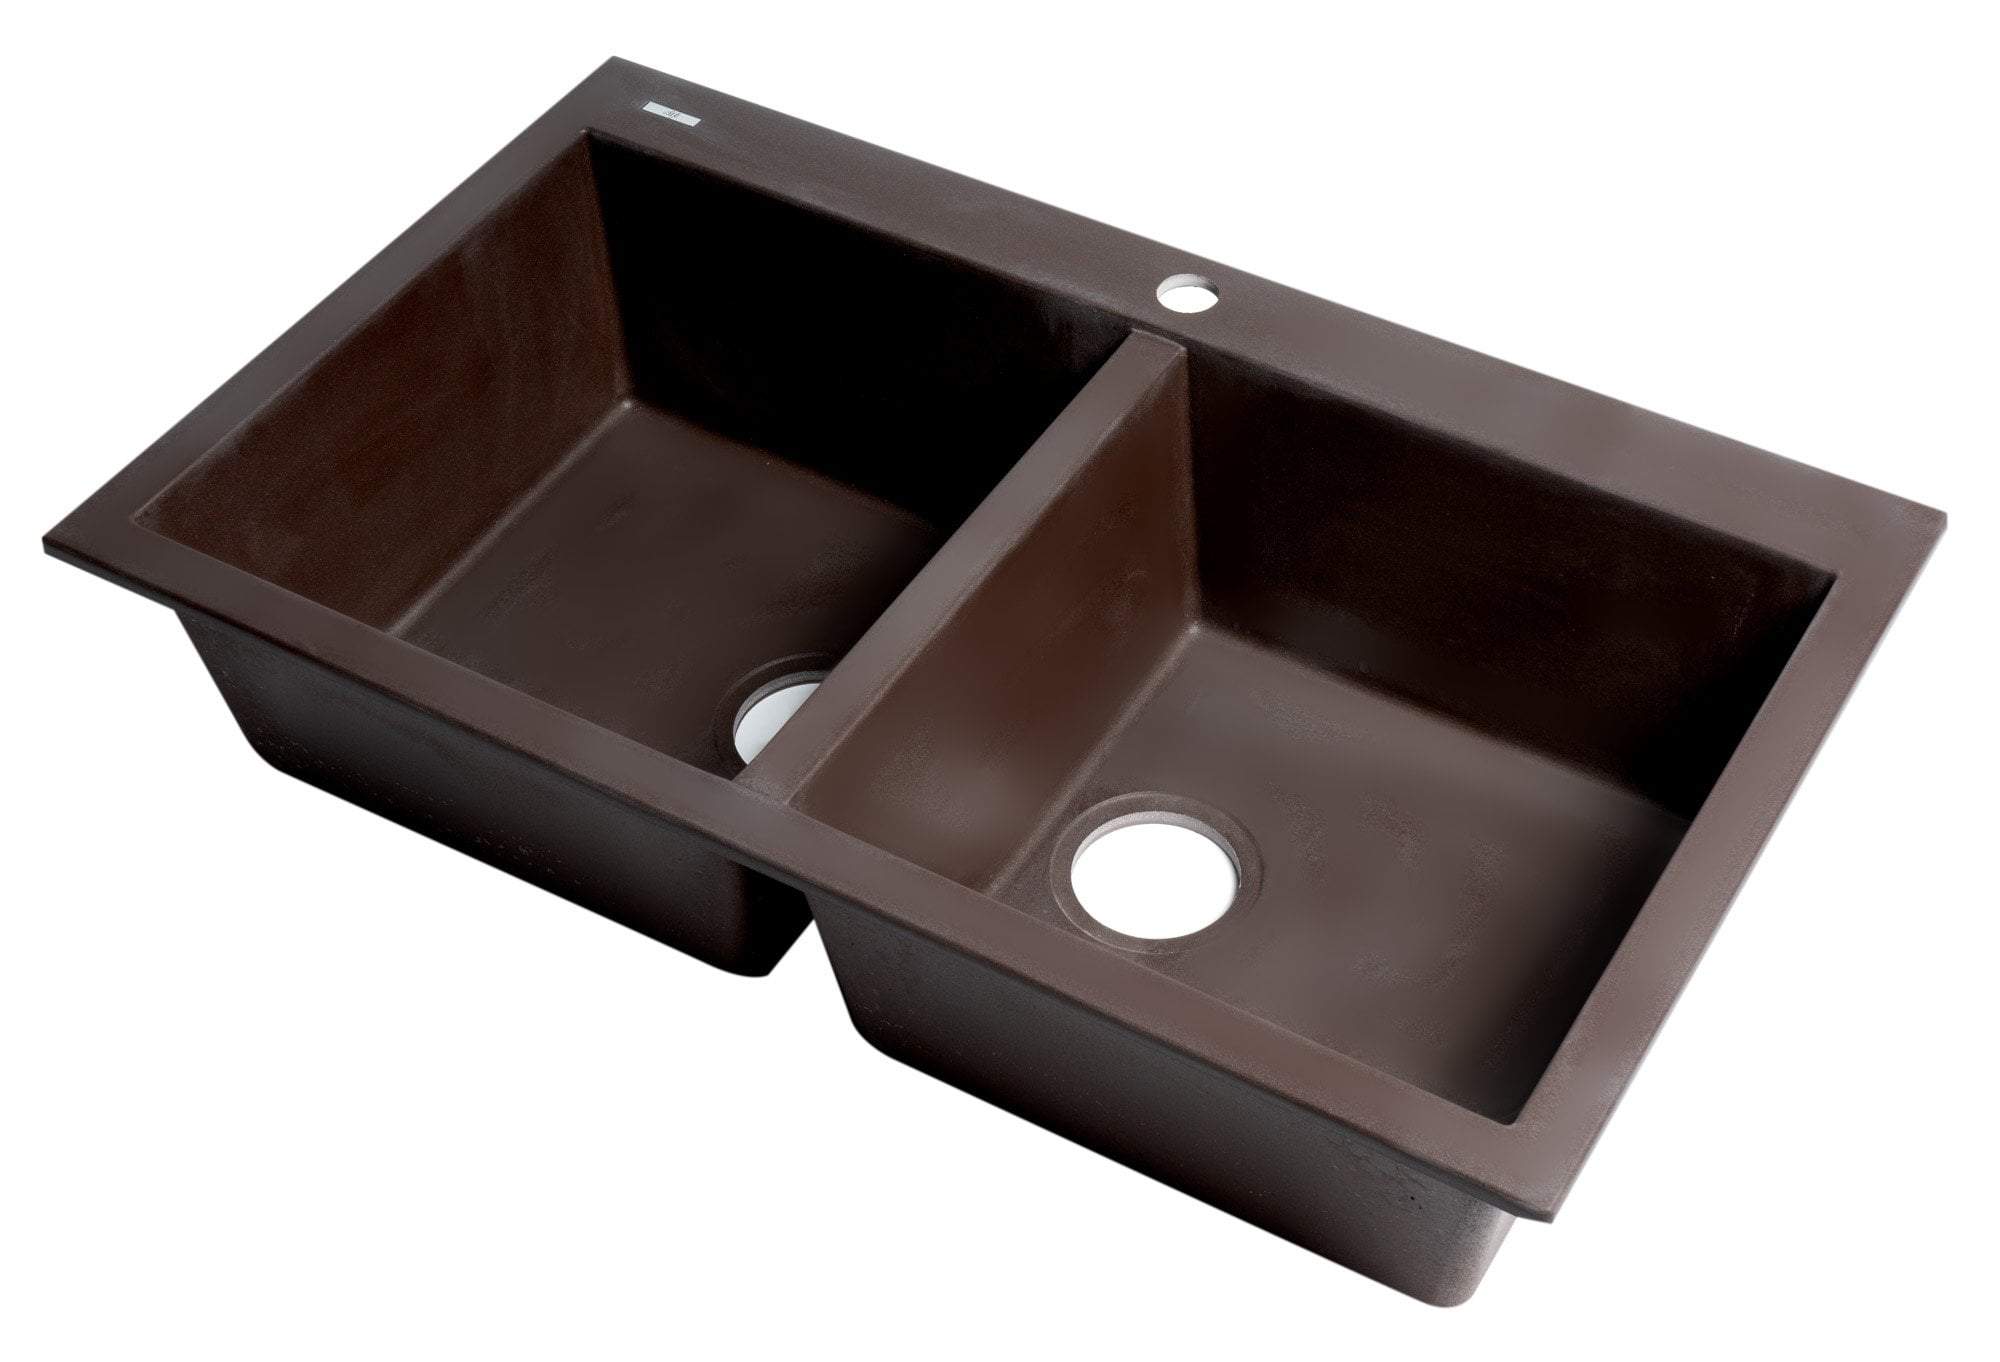 ALFI brand AB3420DI-C Chocolate 34" Drop-In Double Bowl Granite Composite Kitchen Sink